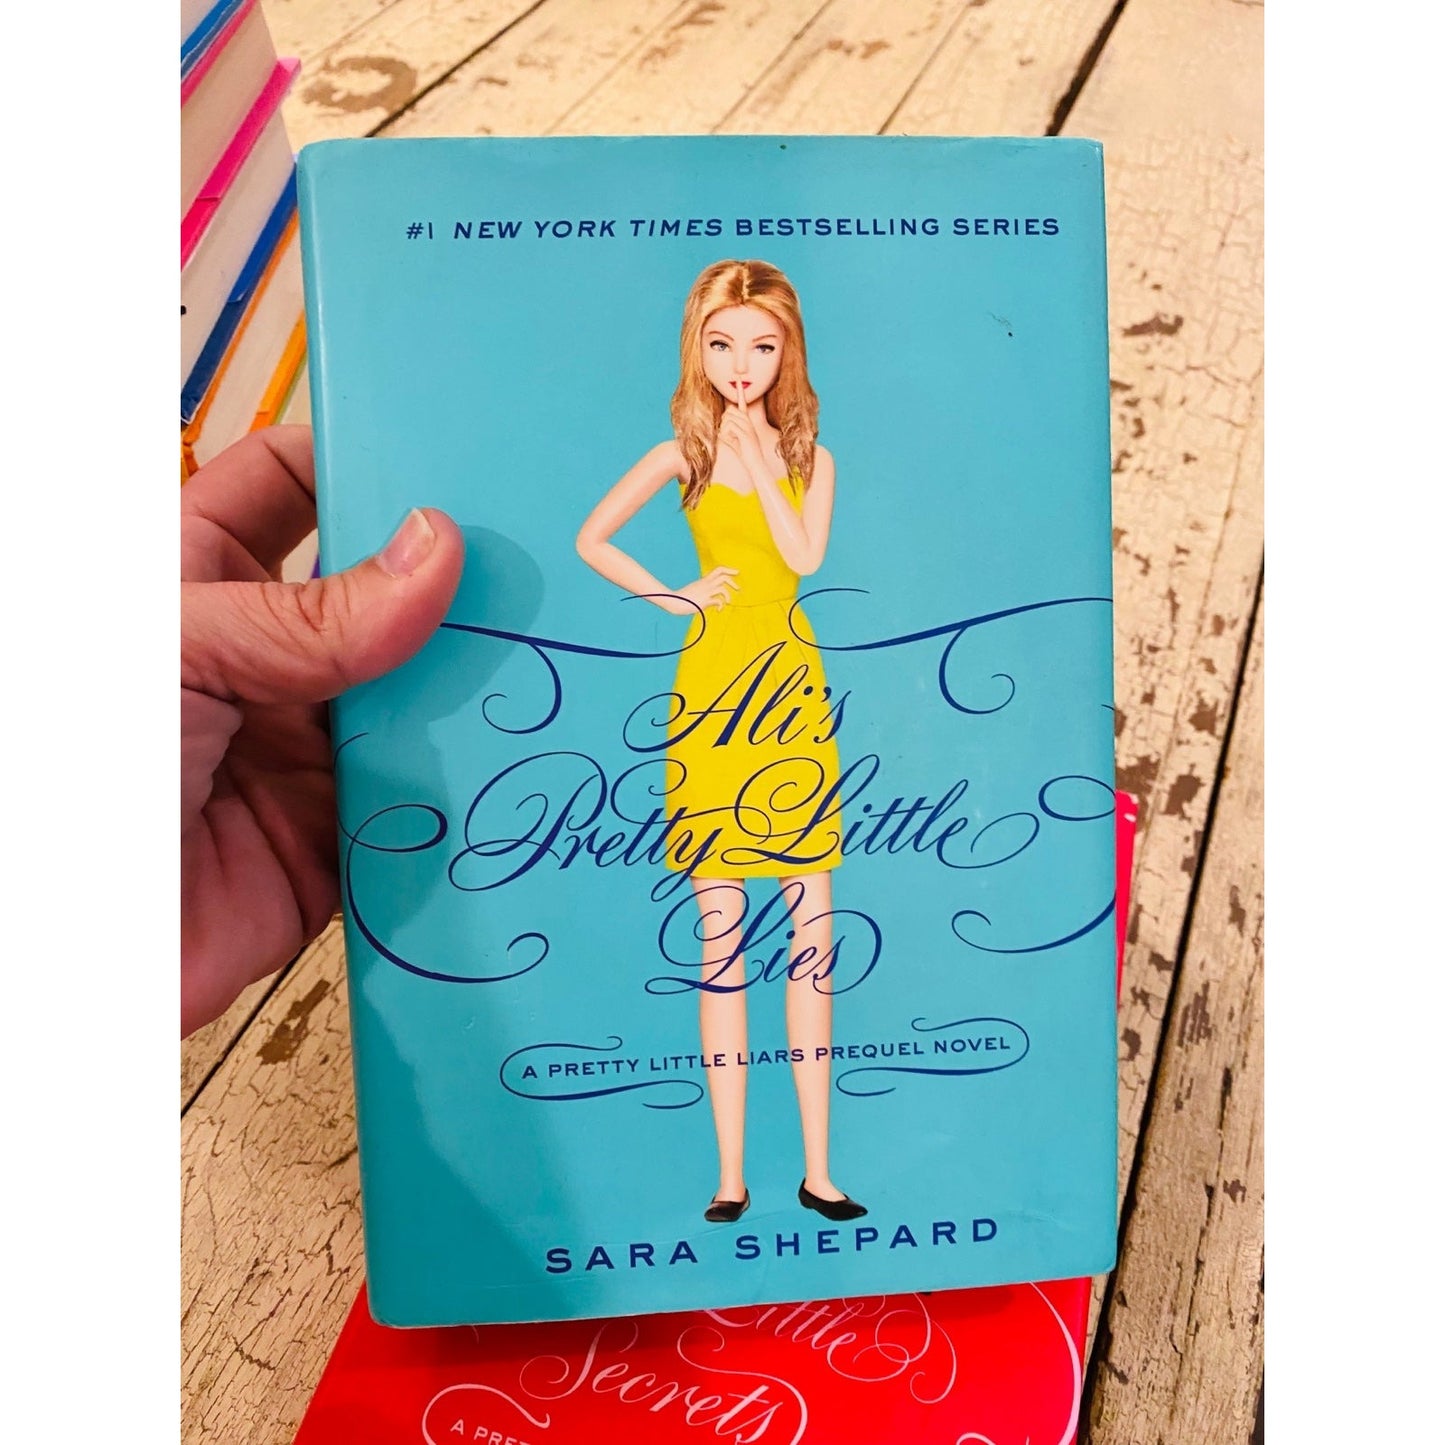 Pretty Little Liars by Sara Shepard books bundle - the series plus extras!